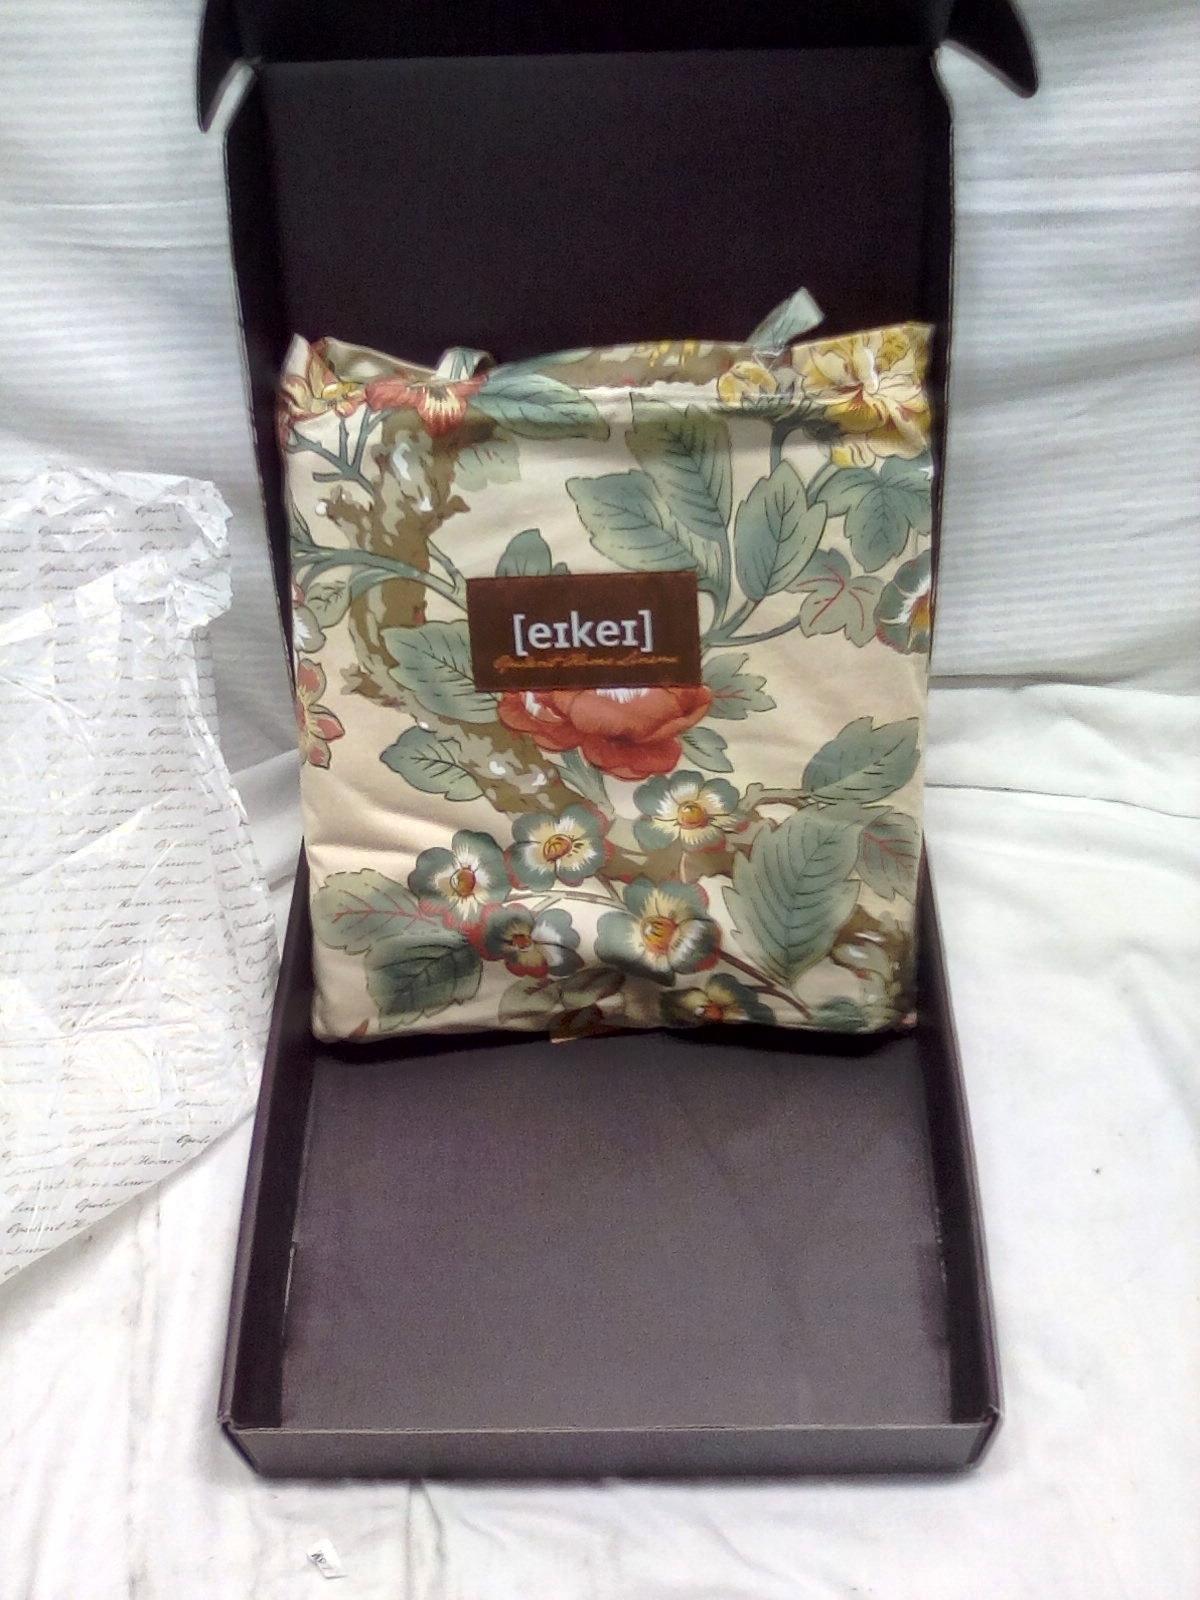 Eikei Deluxe Duvet Cover Set with two Pillow Shams AMZ $108.99 Queen Size